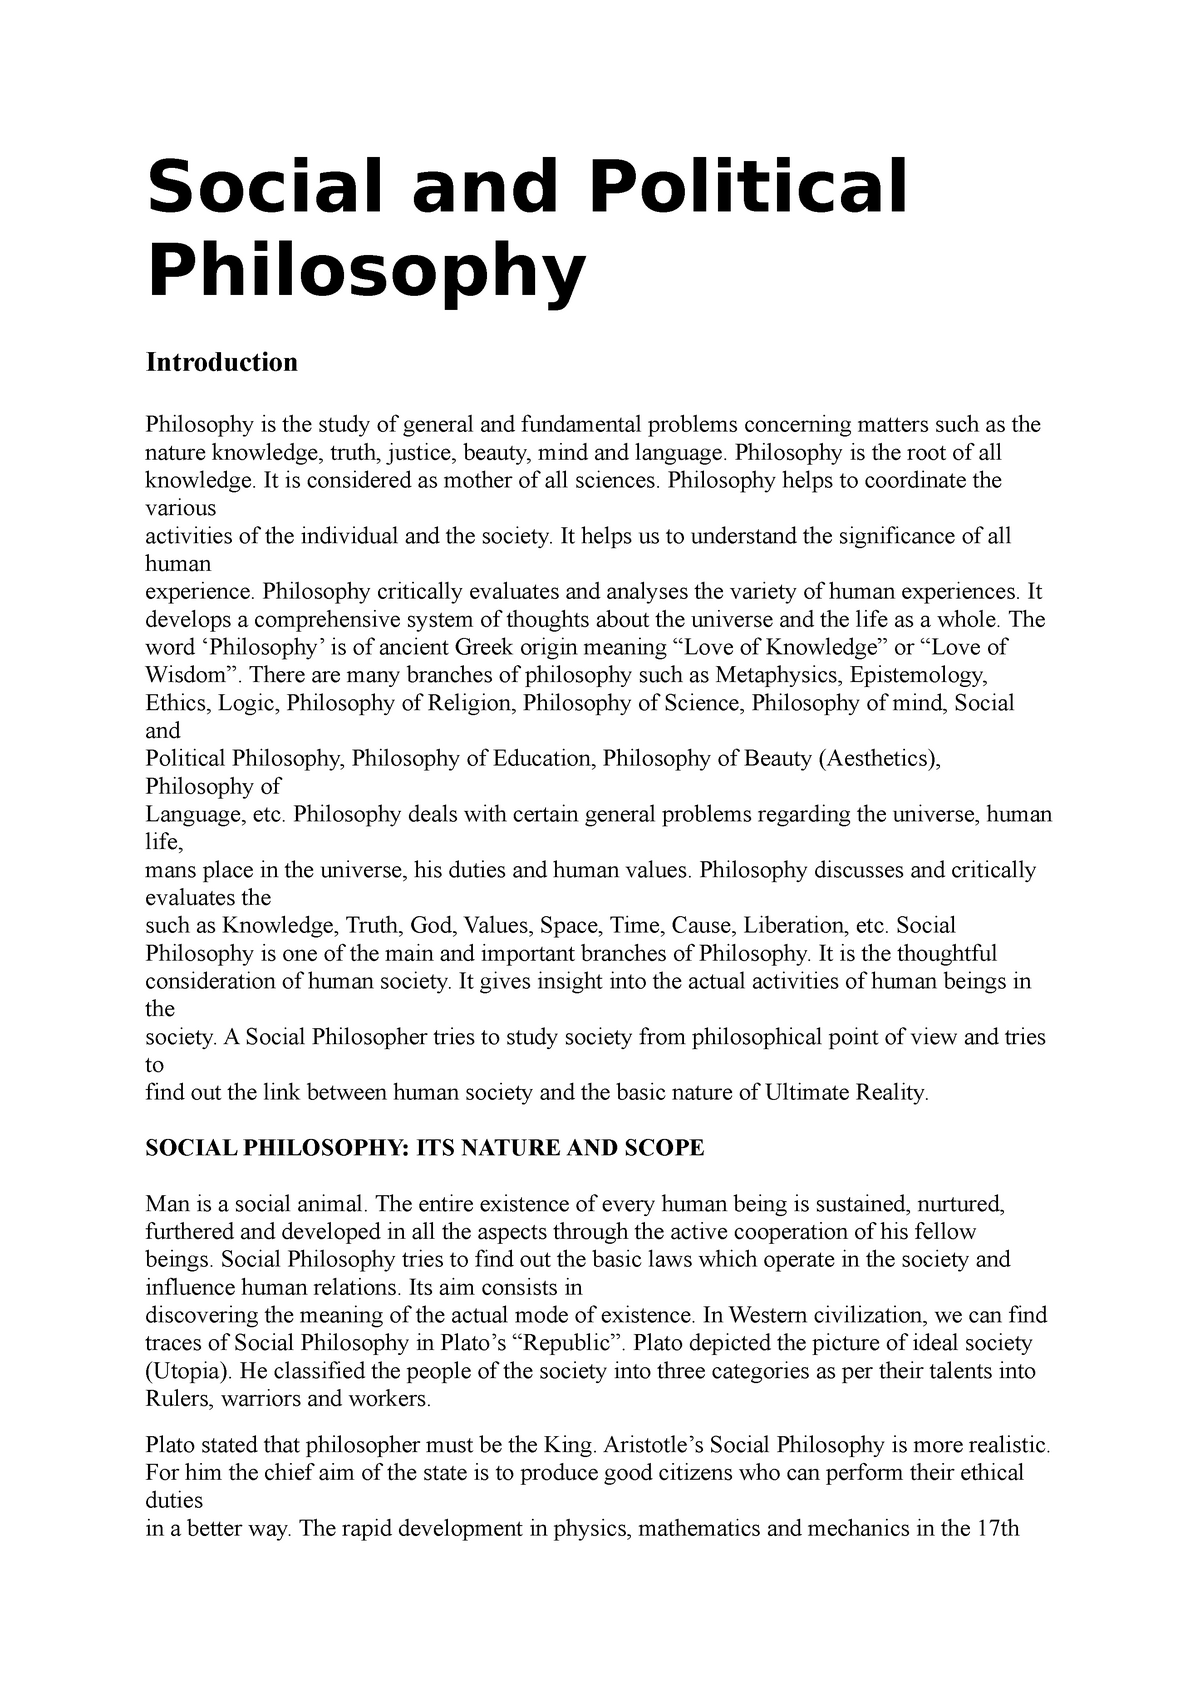 political philosophy essay topics